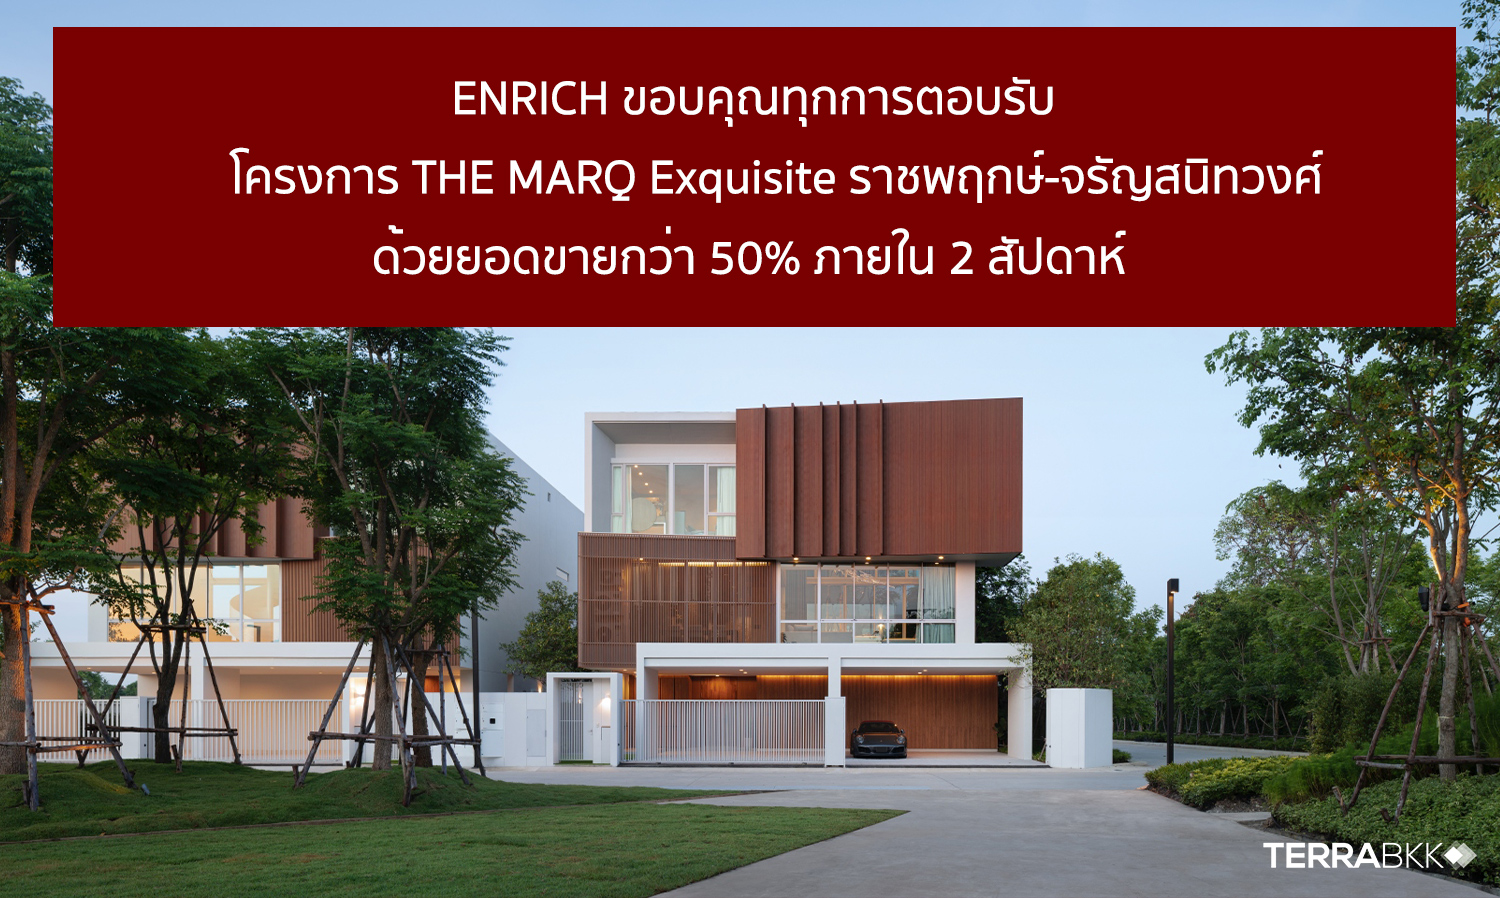 ENRICH ขอบคุณทุกการตอบรับกับโครงการ THE MARQ Exquisite ราชพฤกษ์-จรัญสนิทวงศ์ ด้วยยอดขายกว่า 50% ภายใน 2 สัปดาห์